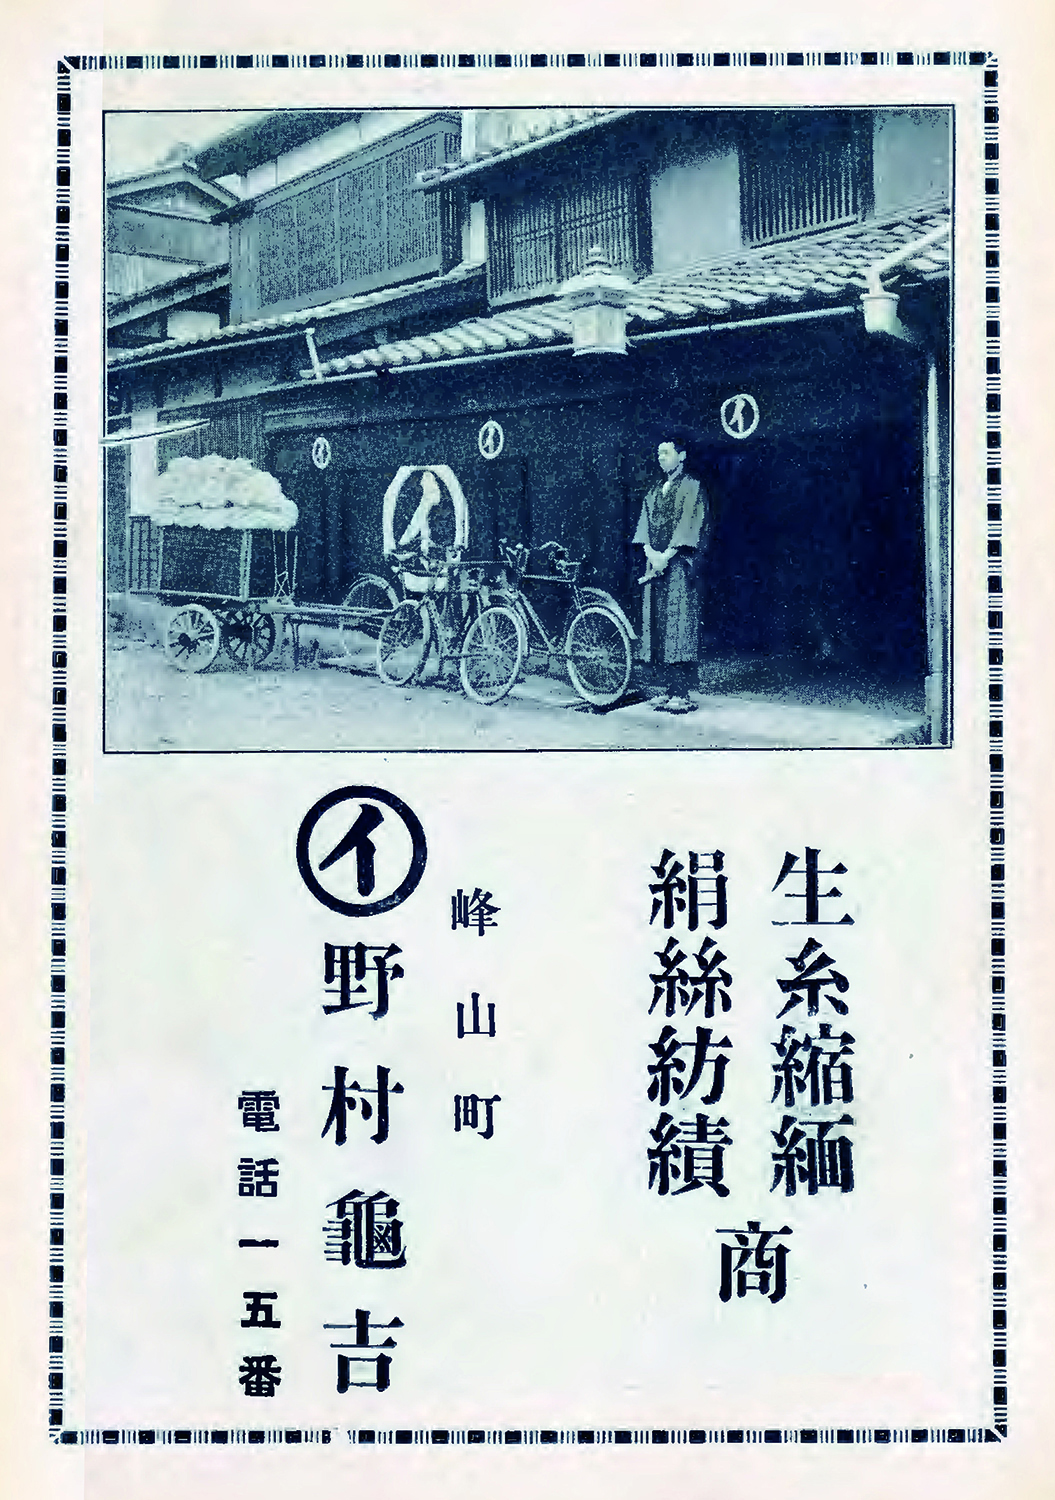 野村亀吉商店's image 1